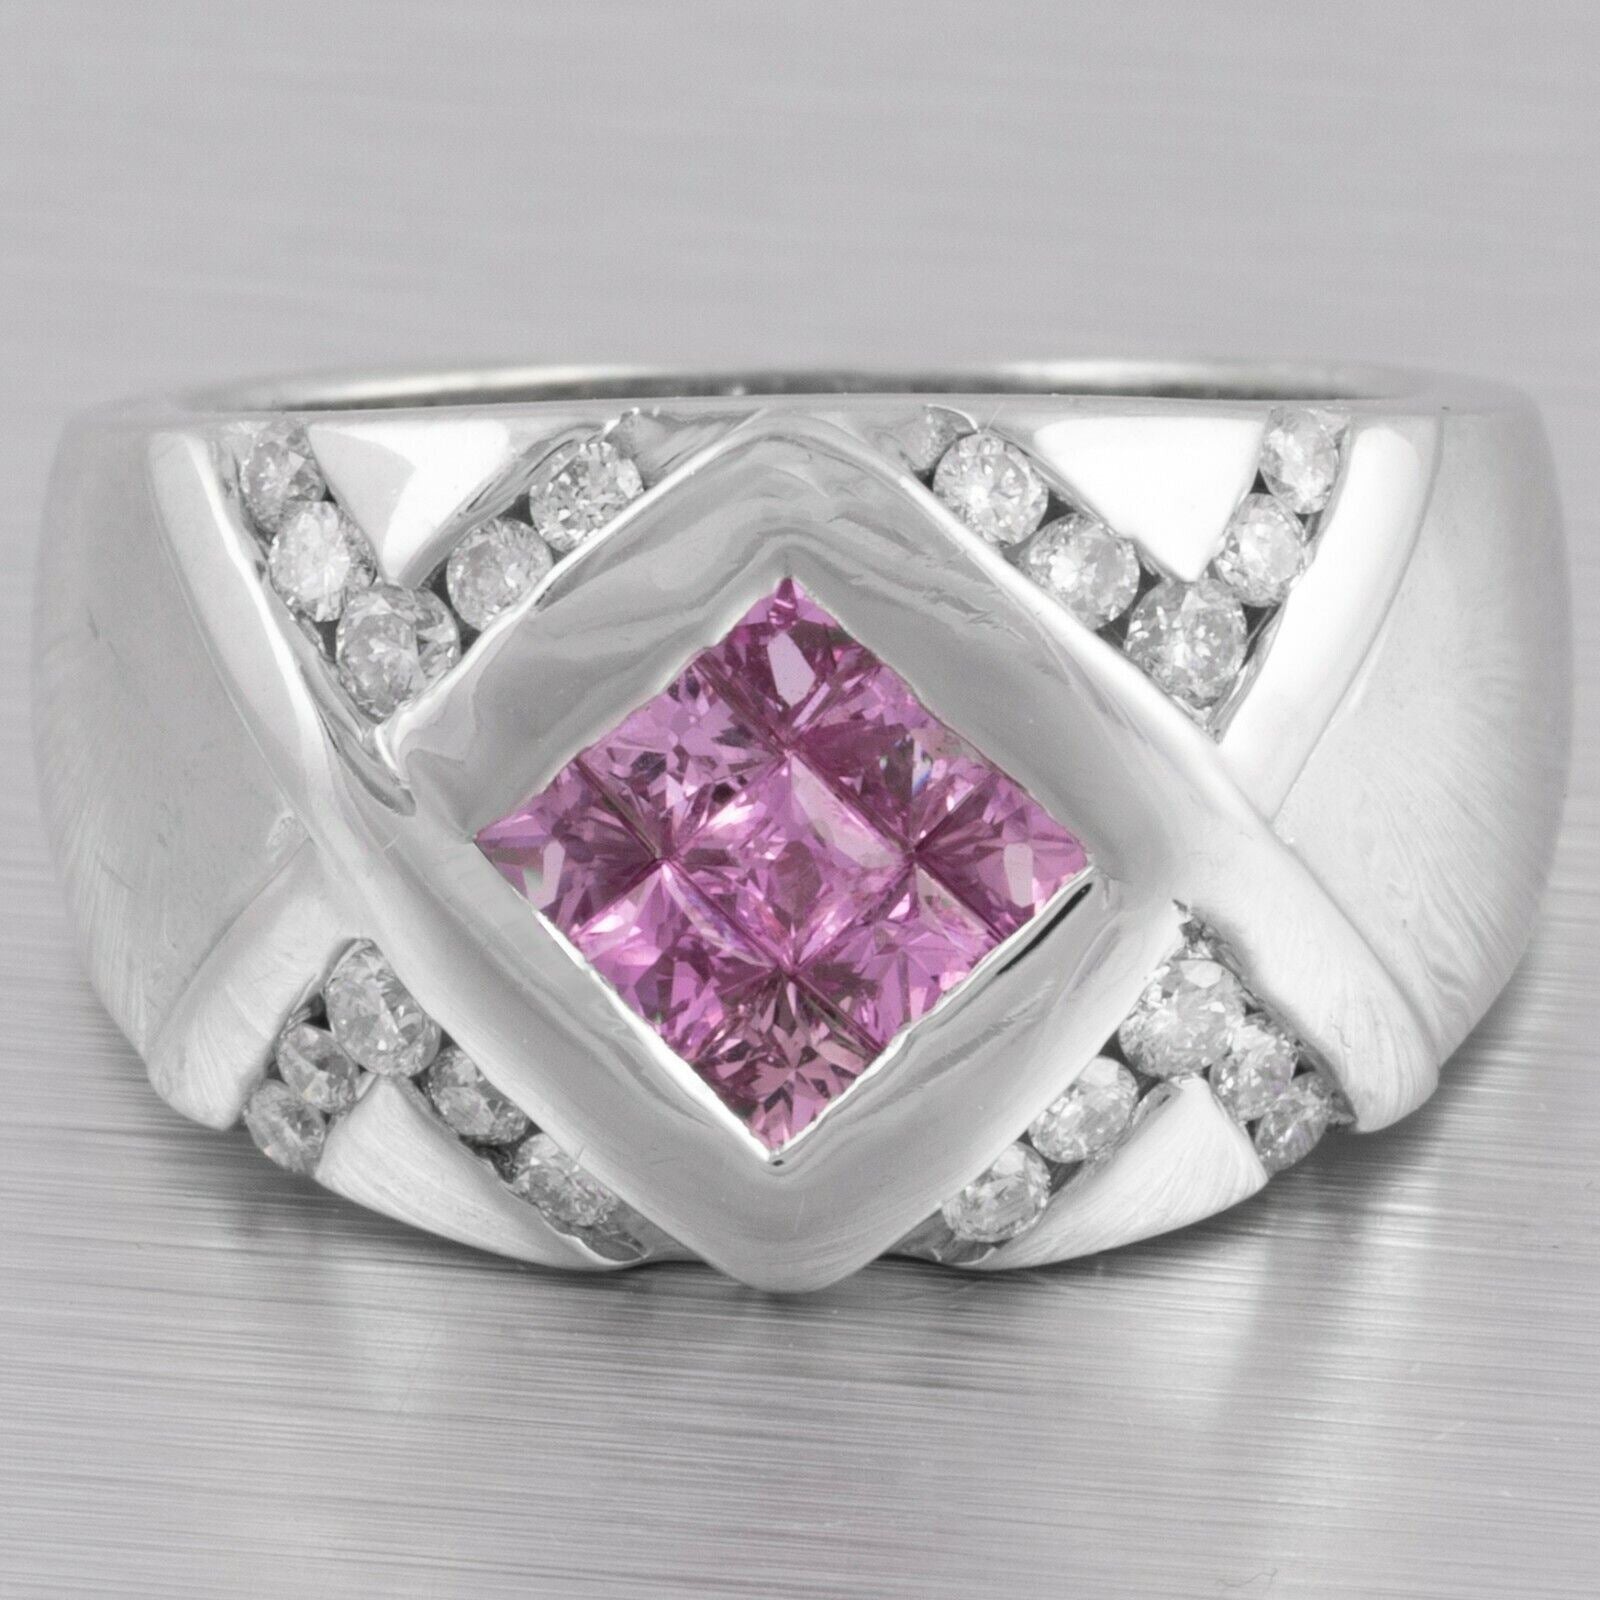 Modern Estate 14k White Gold Pink Sapphire 0.45ctw & Diamond Ring 0.50ctw Size 7